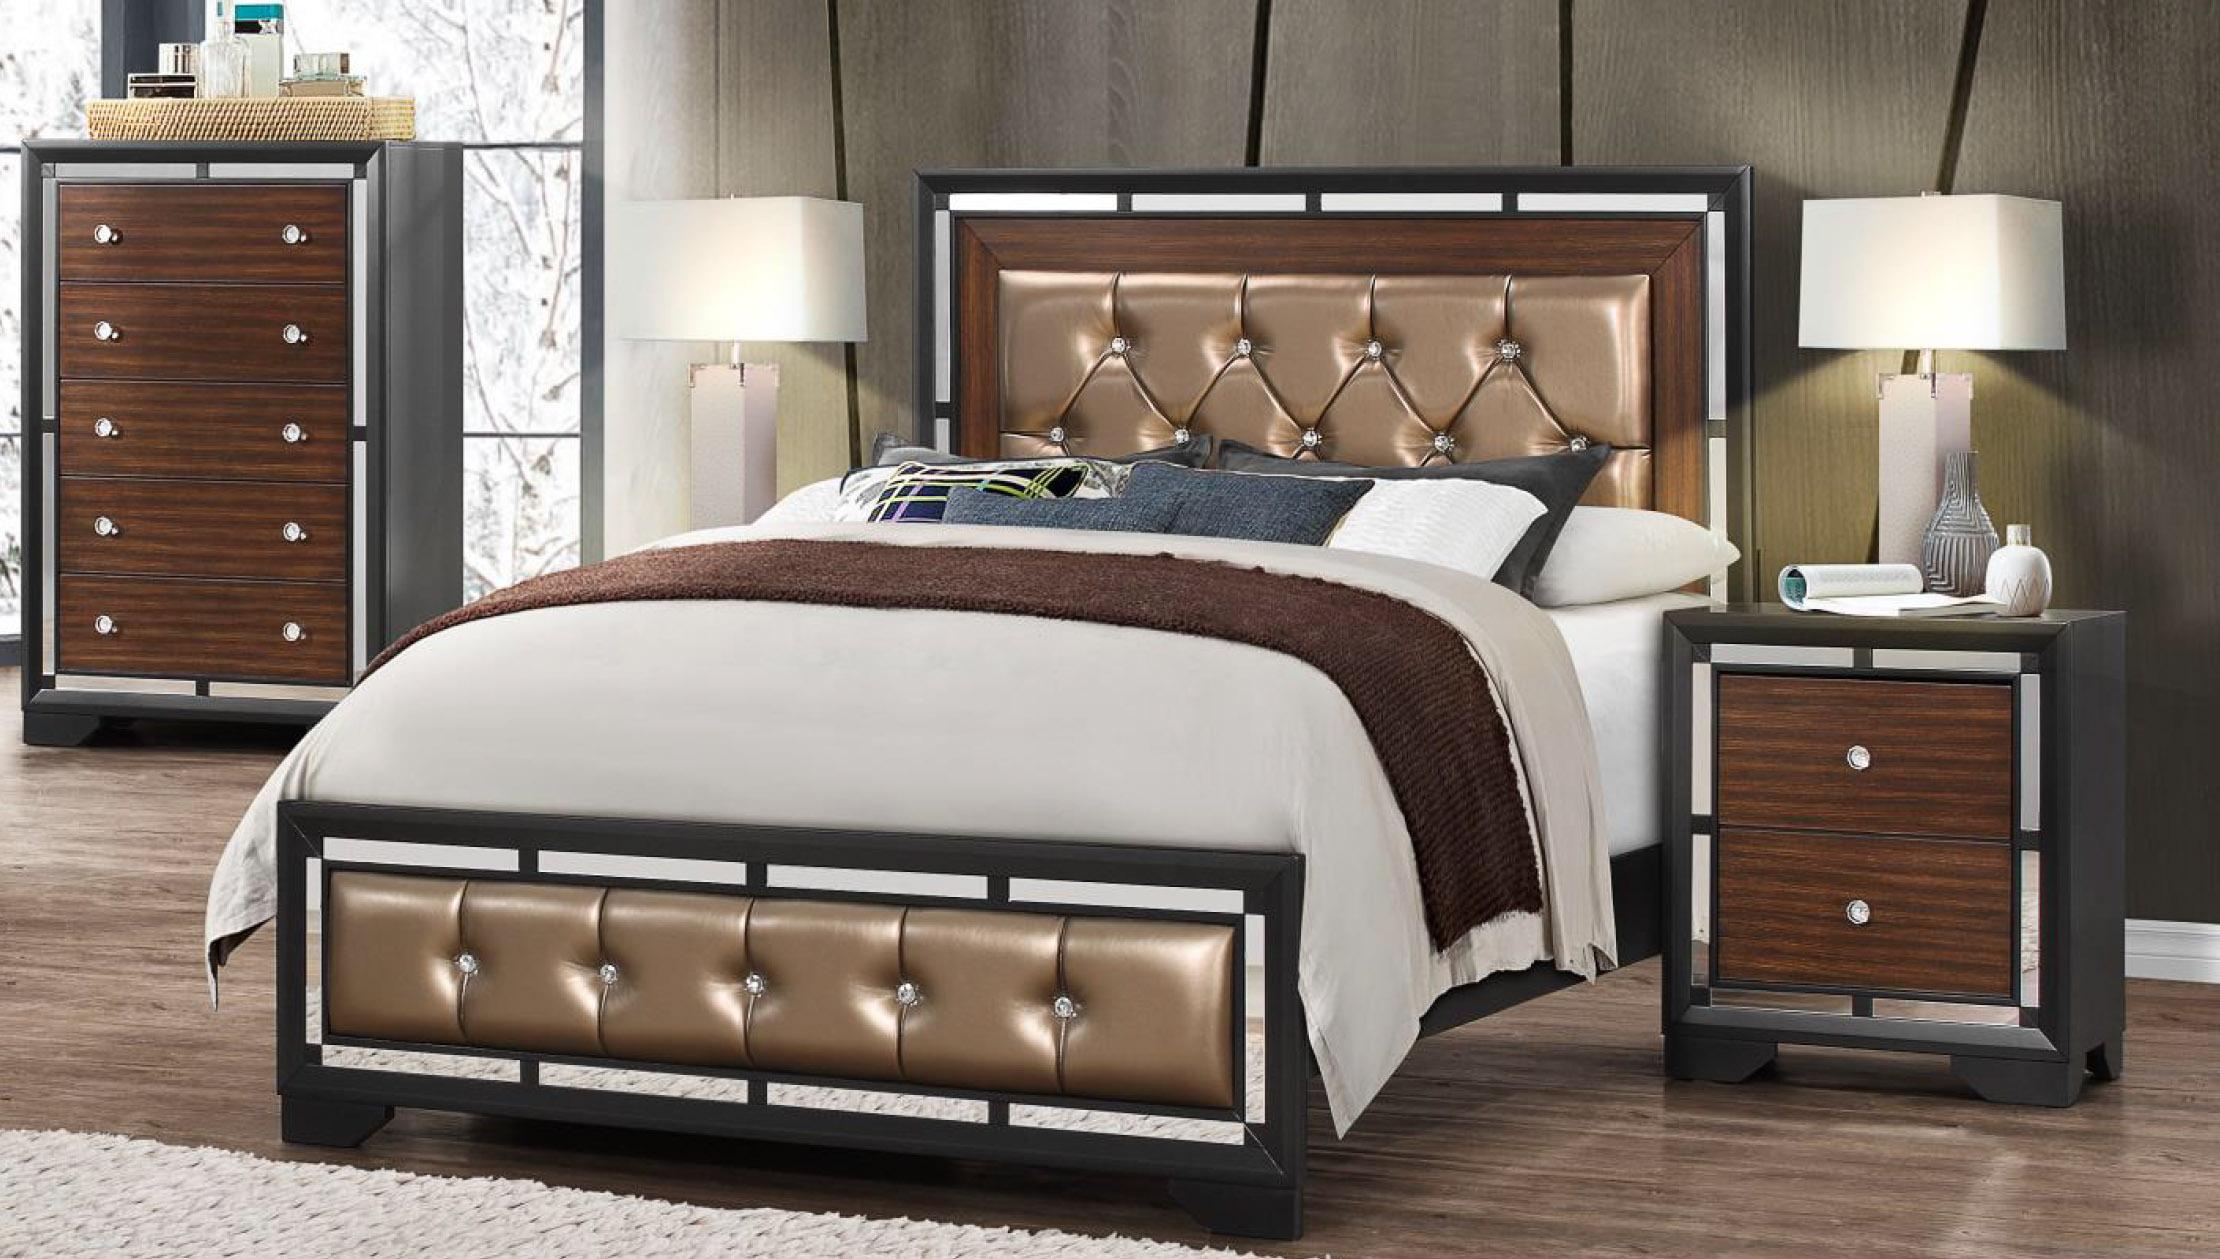 

    
Global Furniture Camila Modern Dark Grey Finish Wood Accents King Bedroom Set 5 Pcs
